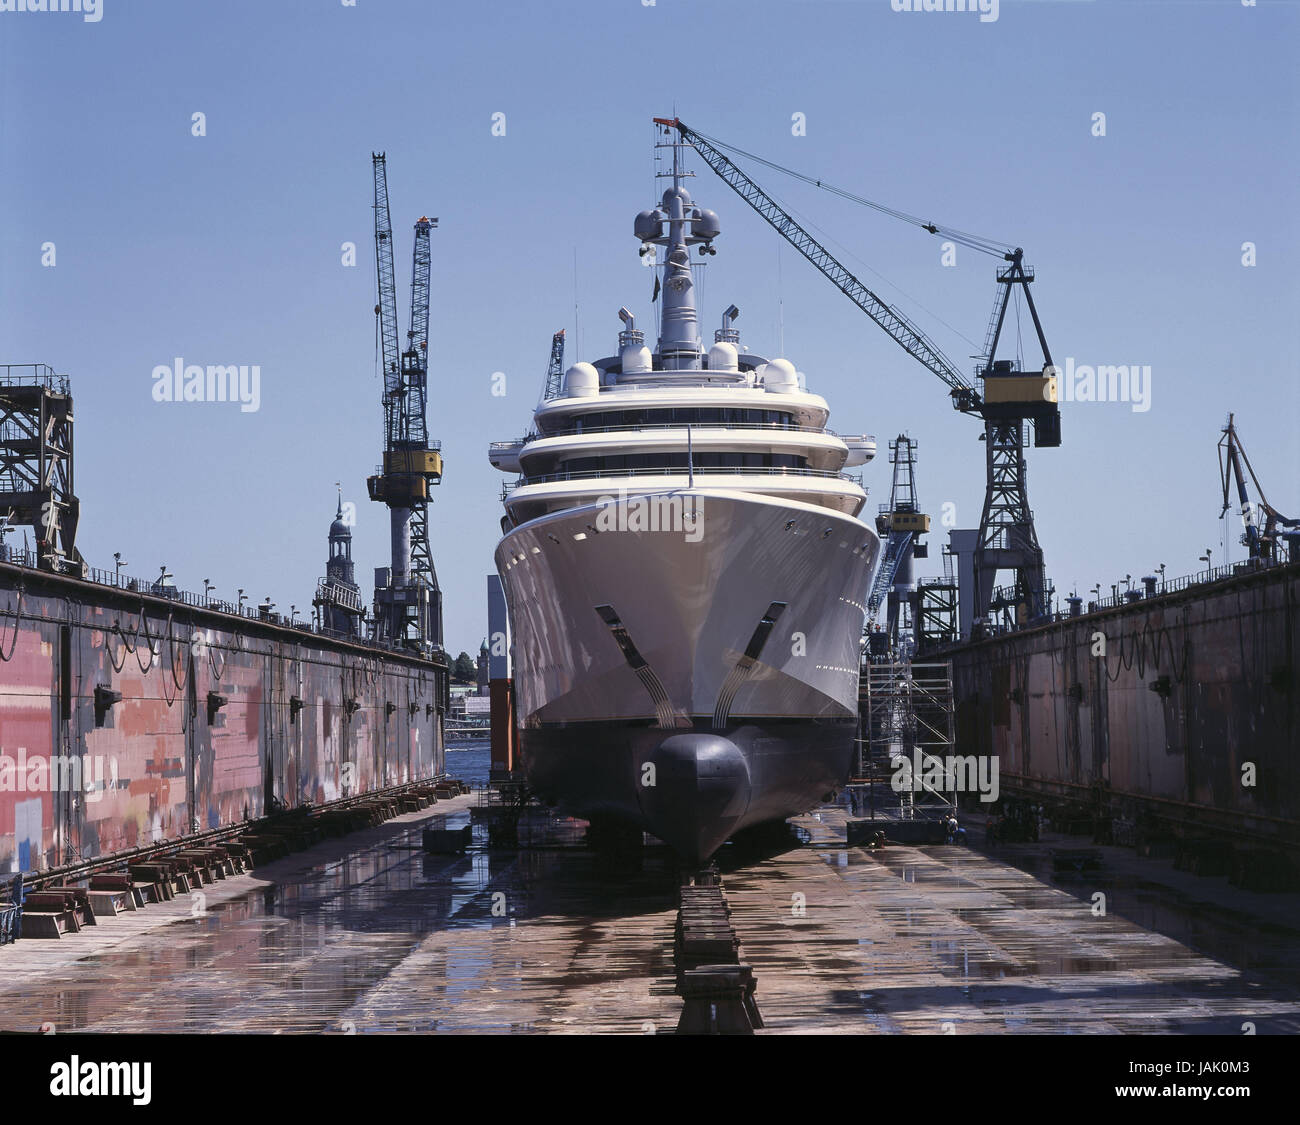 Germany,Hamburg,harbour,shipyard,superyacht 'Eclipse',swimming dock,Blohm and Voss,harbour,dock,ship,dockyard,cranes,superyacht,yacht,yacht,luxury,wealth,mega yacht,Eclipse,maintenance,overhaul,Abramowitsch, Stock Photo